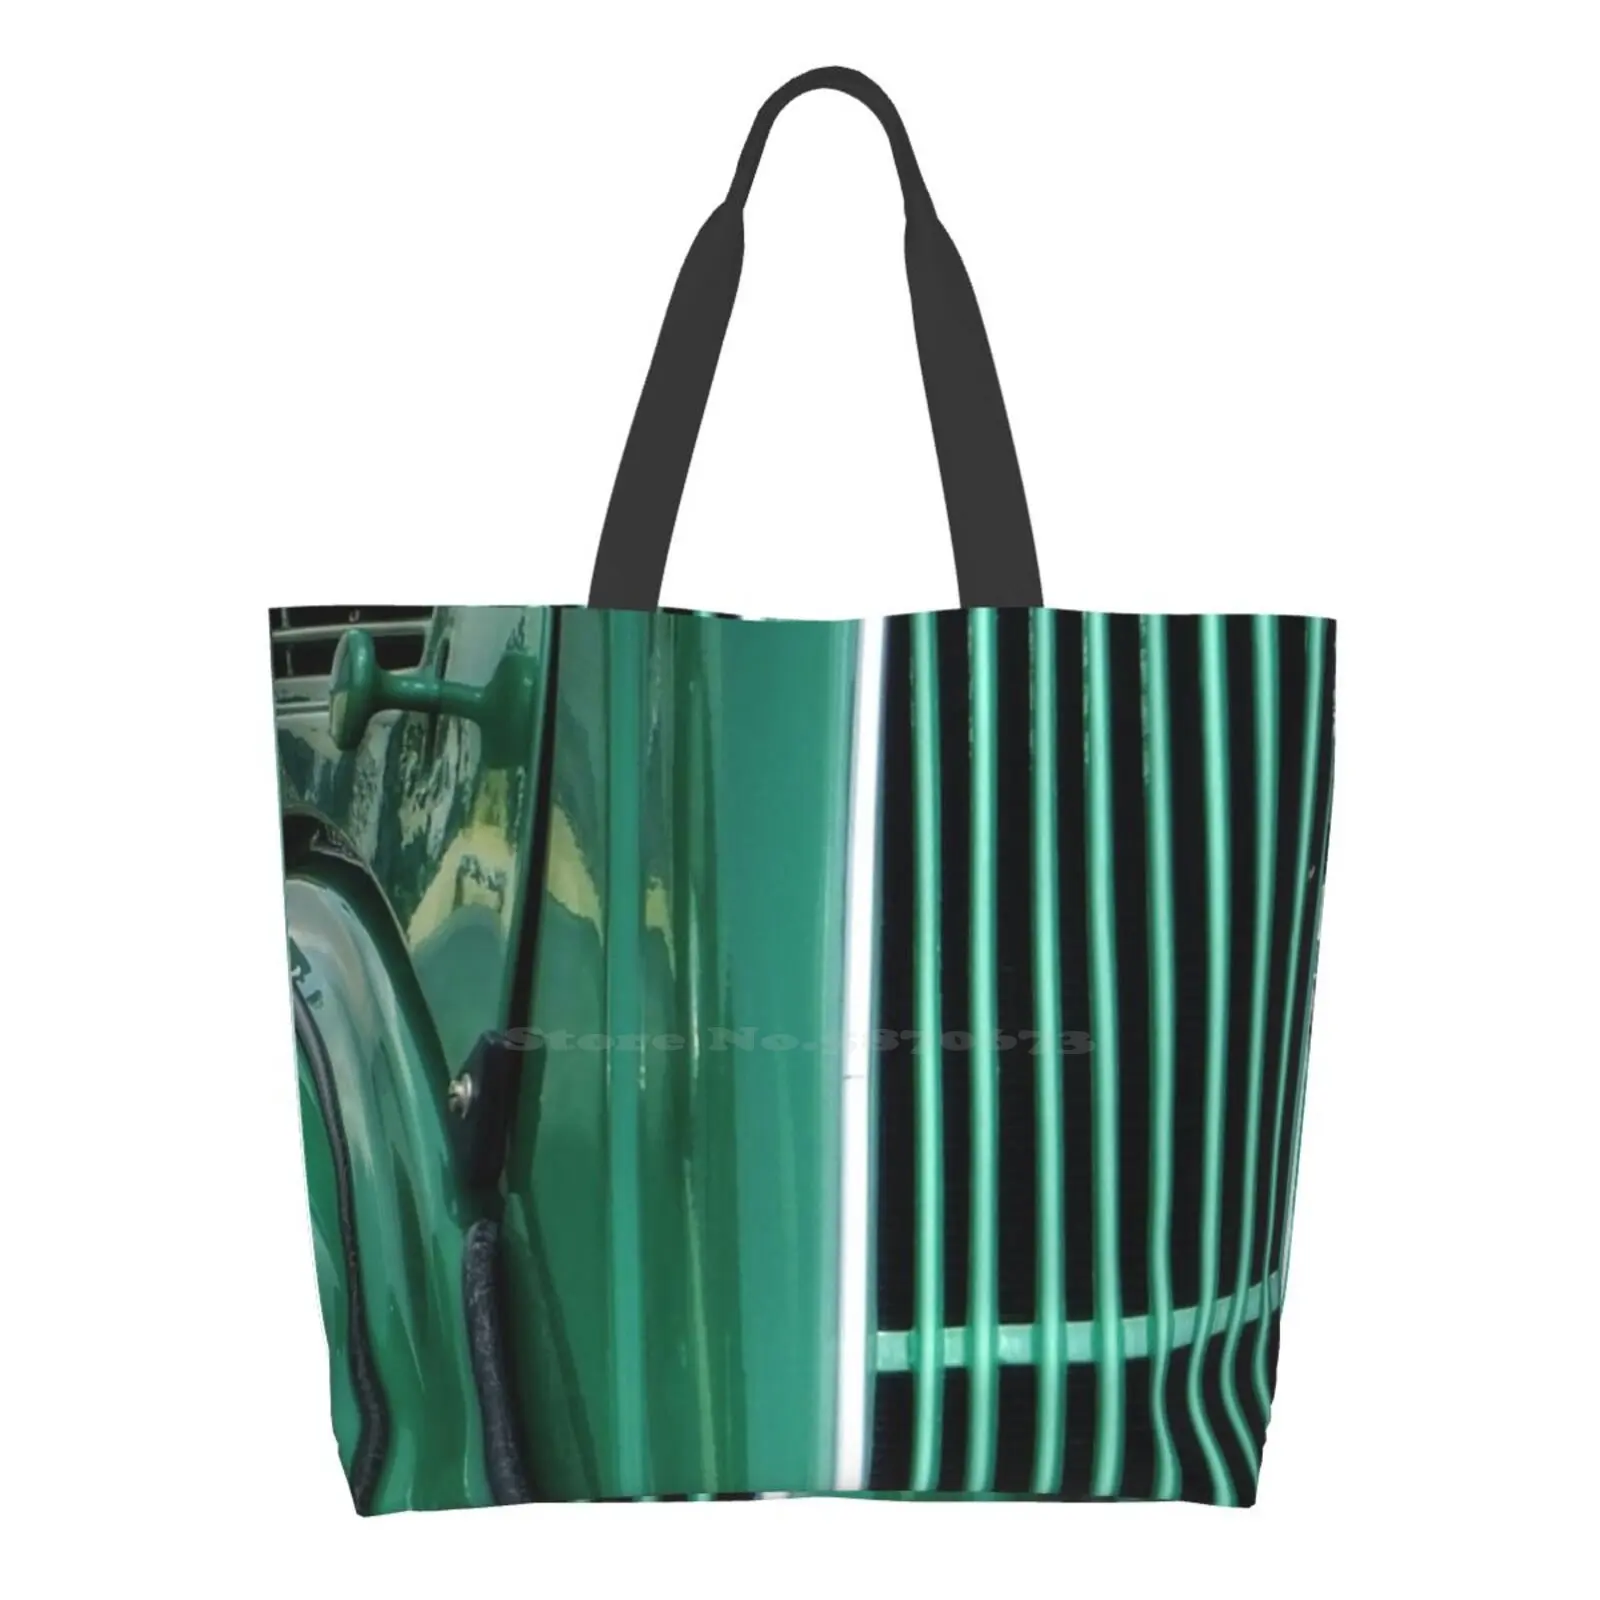 

Ford Popular Car Grill #3 Designer Handbags Shopping Tote Popular Popular Uk Grill Chrome Green Ics Anonymous Car Vehicle